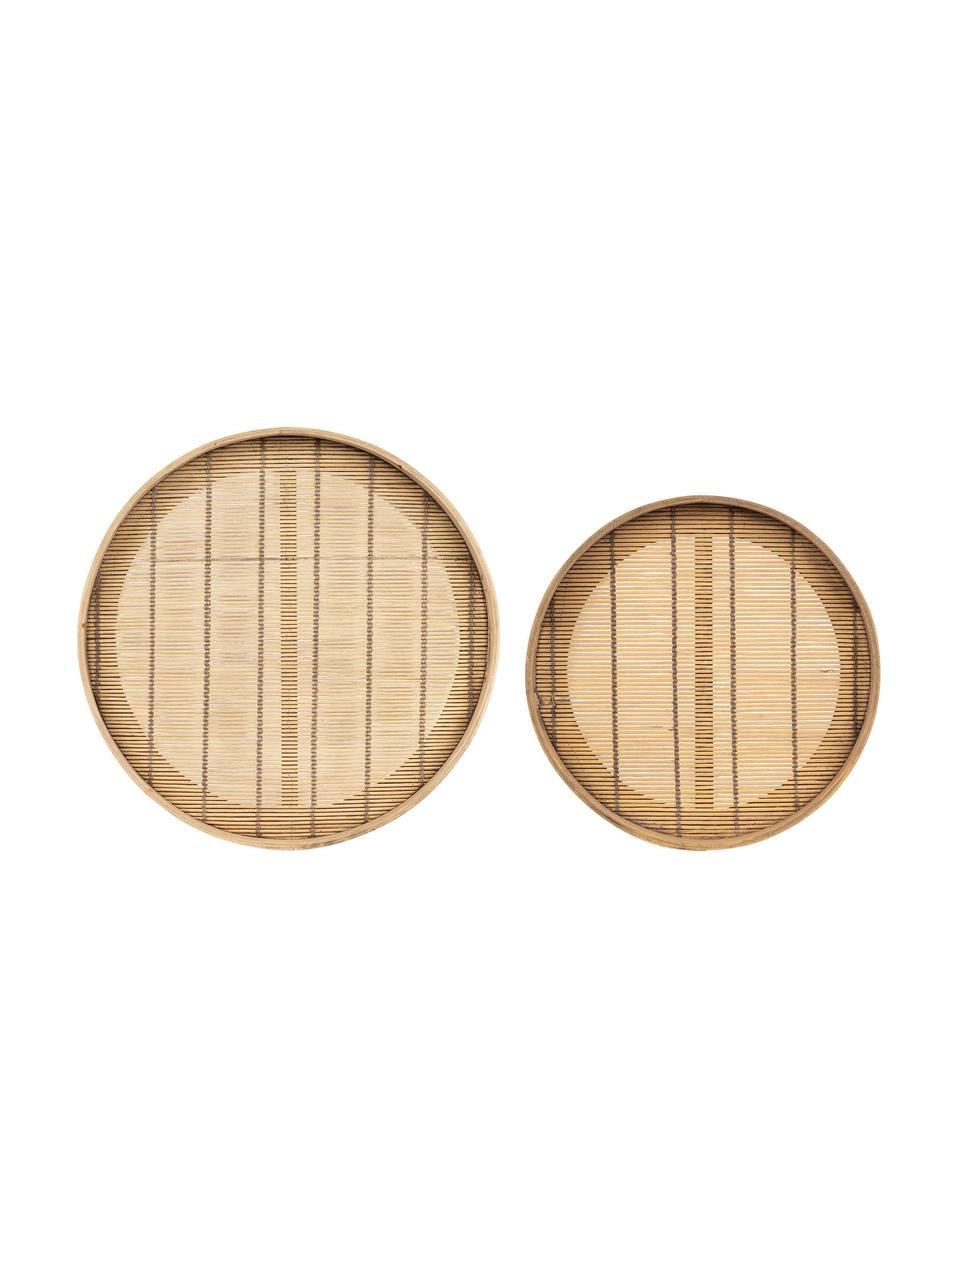 Dienbladenset Plaka van bamboehout en dennenhout, 2-delig, Bamboe, dennenhout, Beige, Set met verschillende formaten